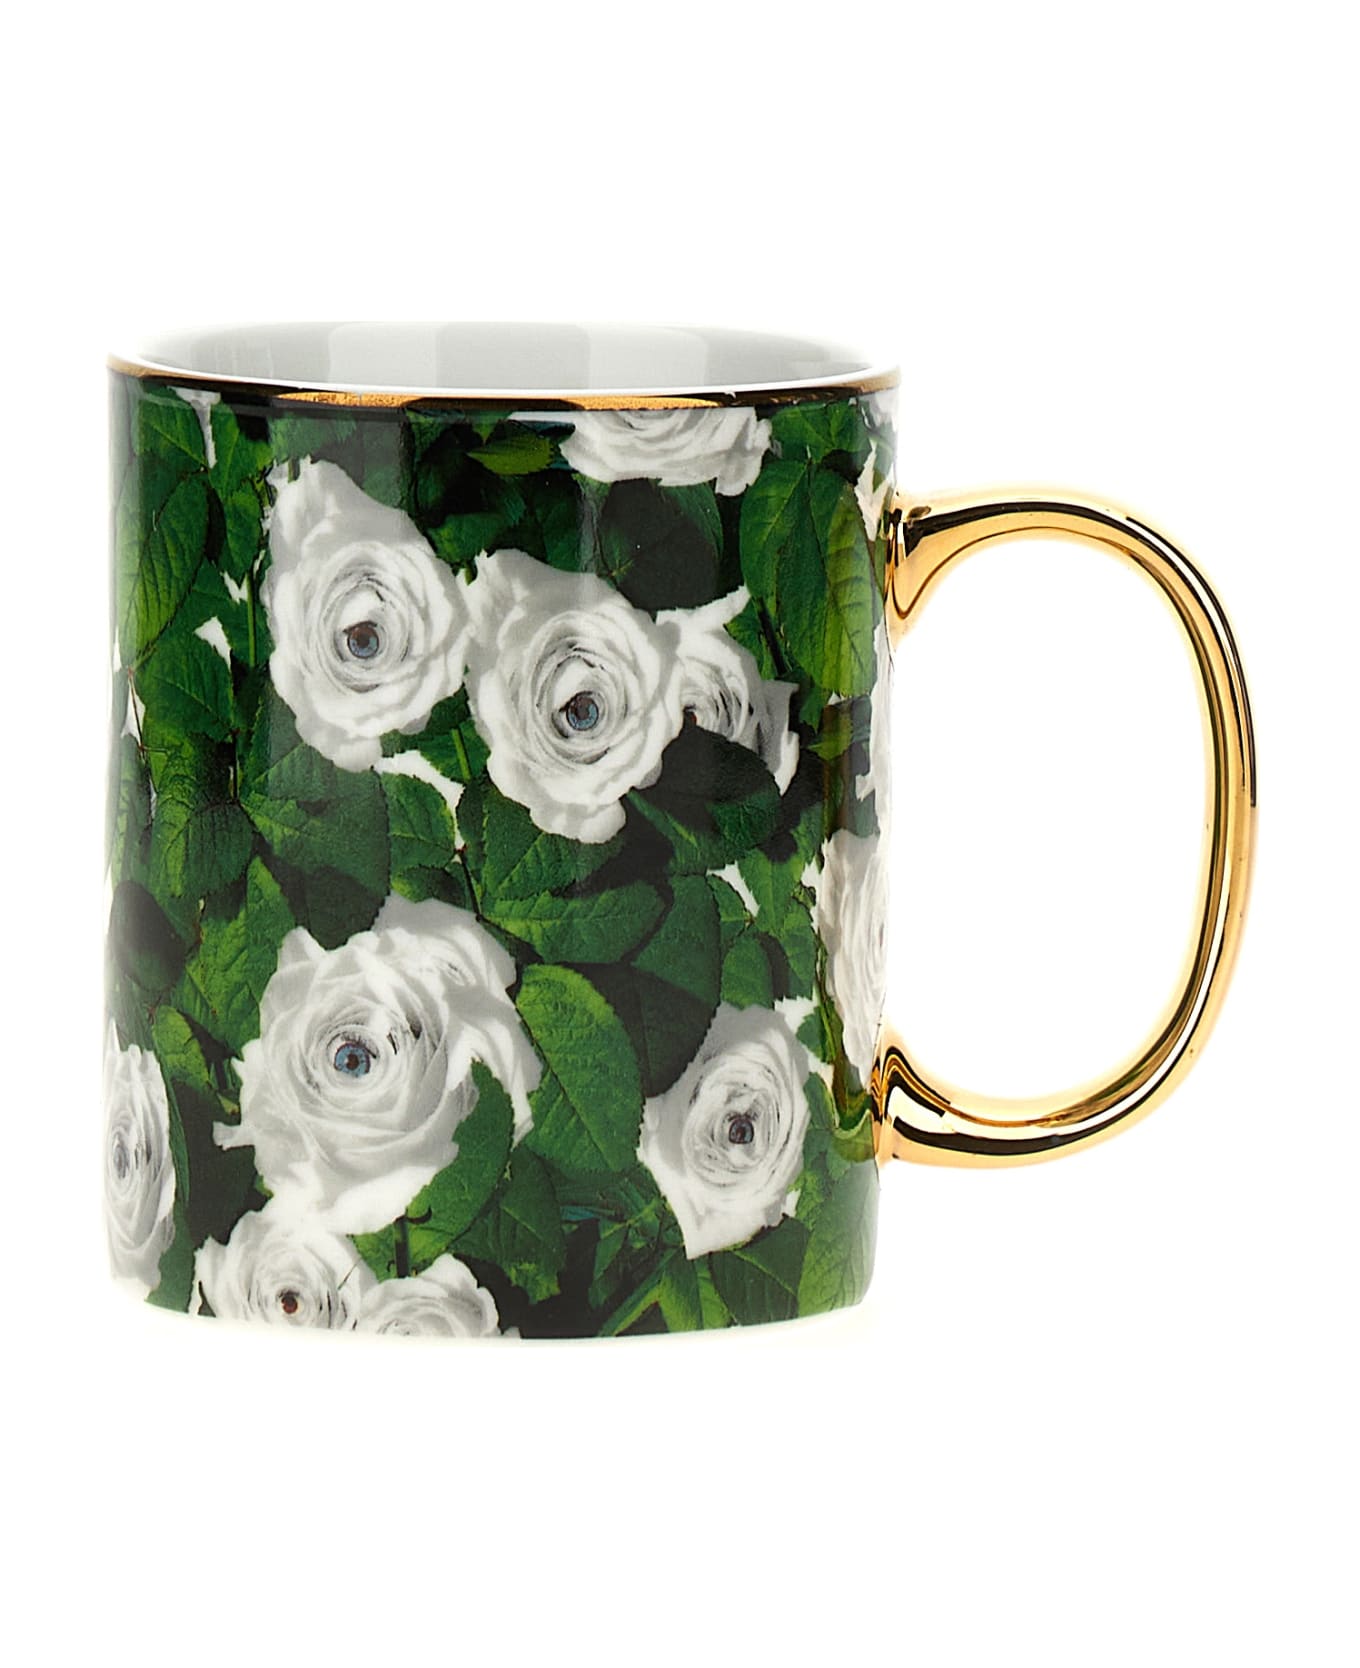 Seletti X Toiletpaper 'roses' Cup - Multicolor グラス